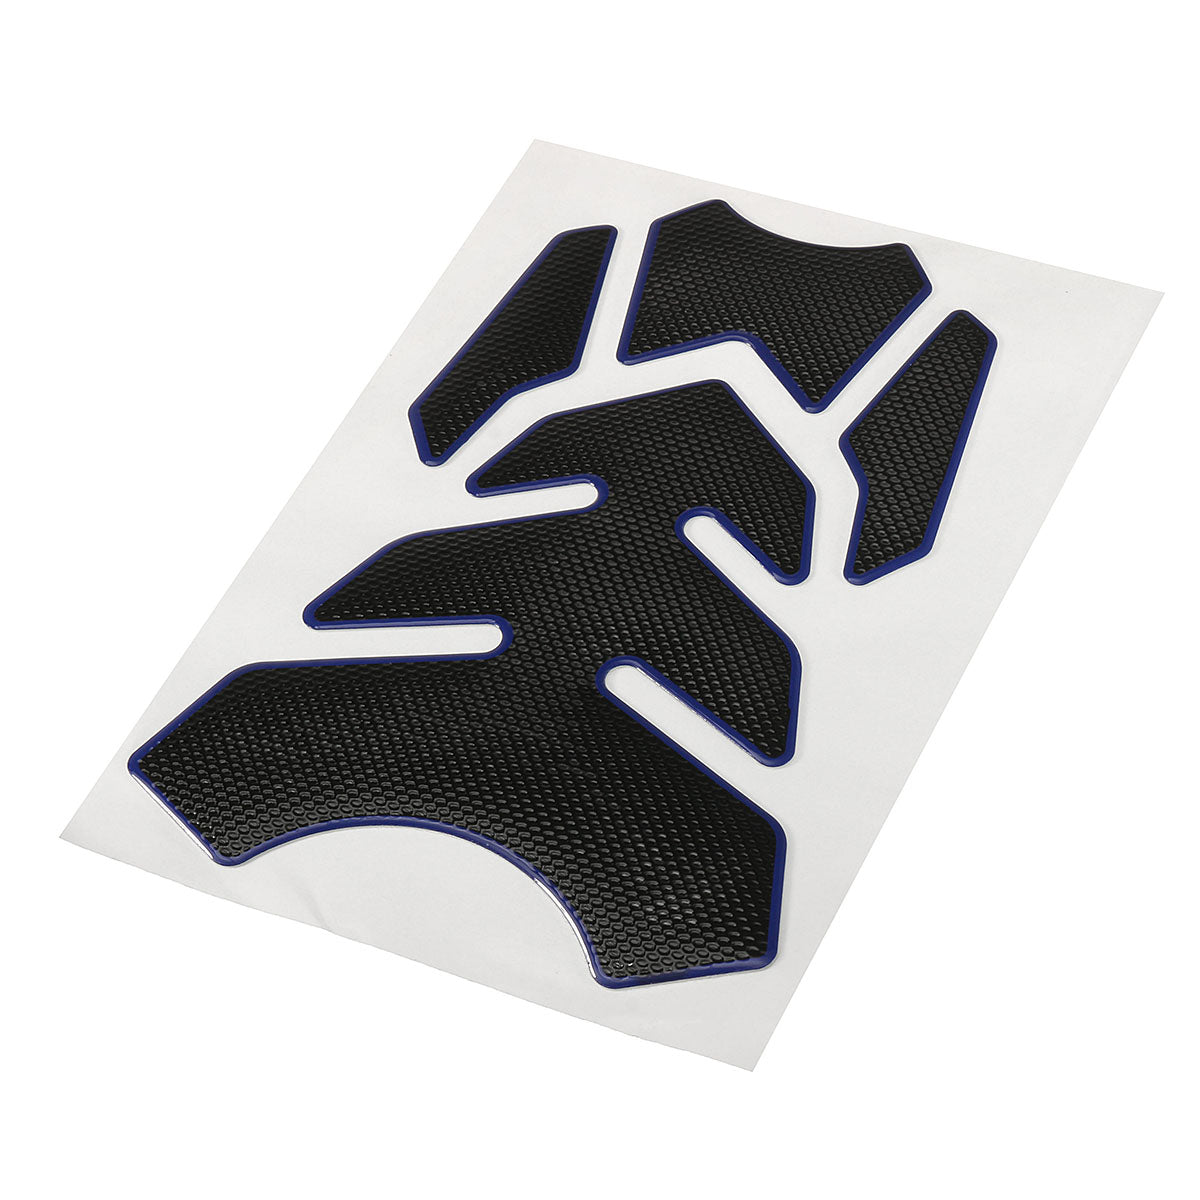 Black Motorcycle Tank Pad Decals Stickers For Honda/Suzuki/Yamaha/Kawasaki